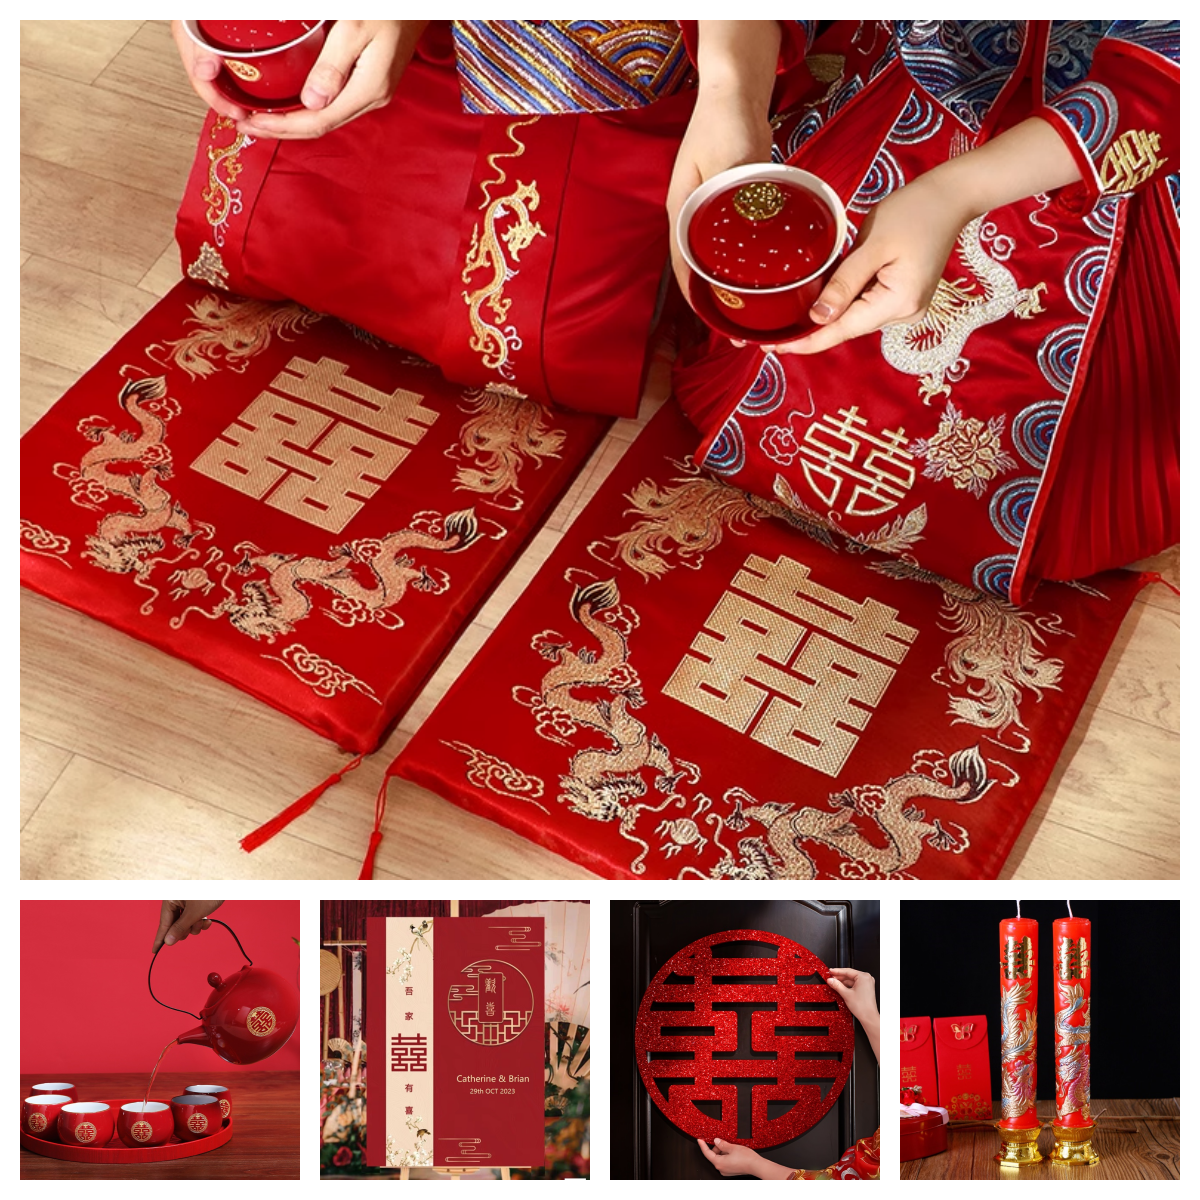 Chinese wedding decorations, tea set etc